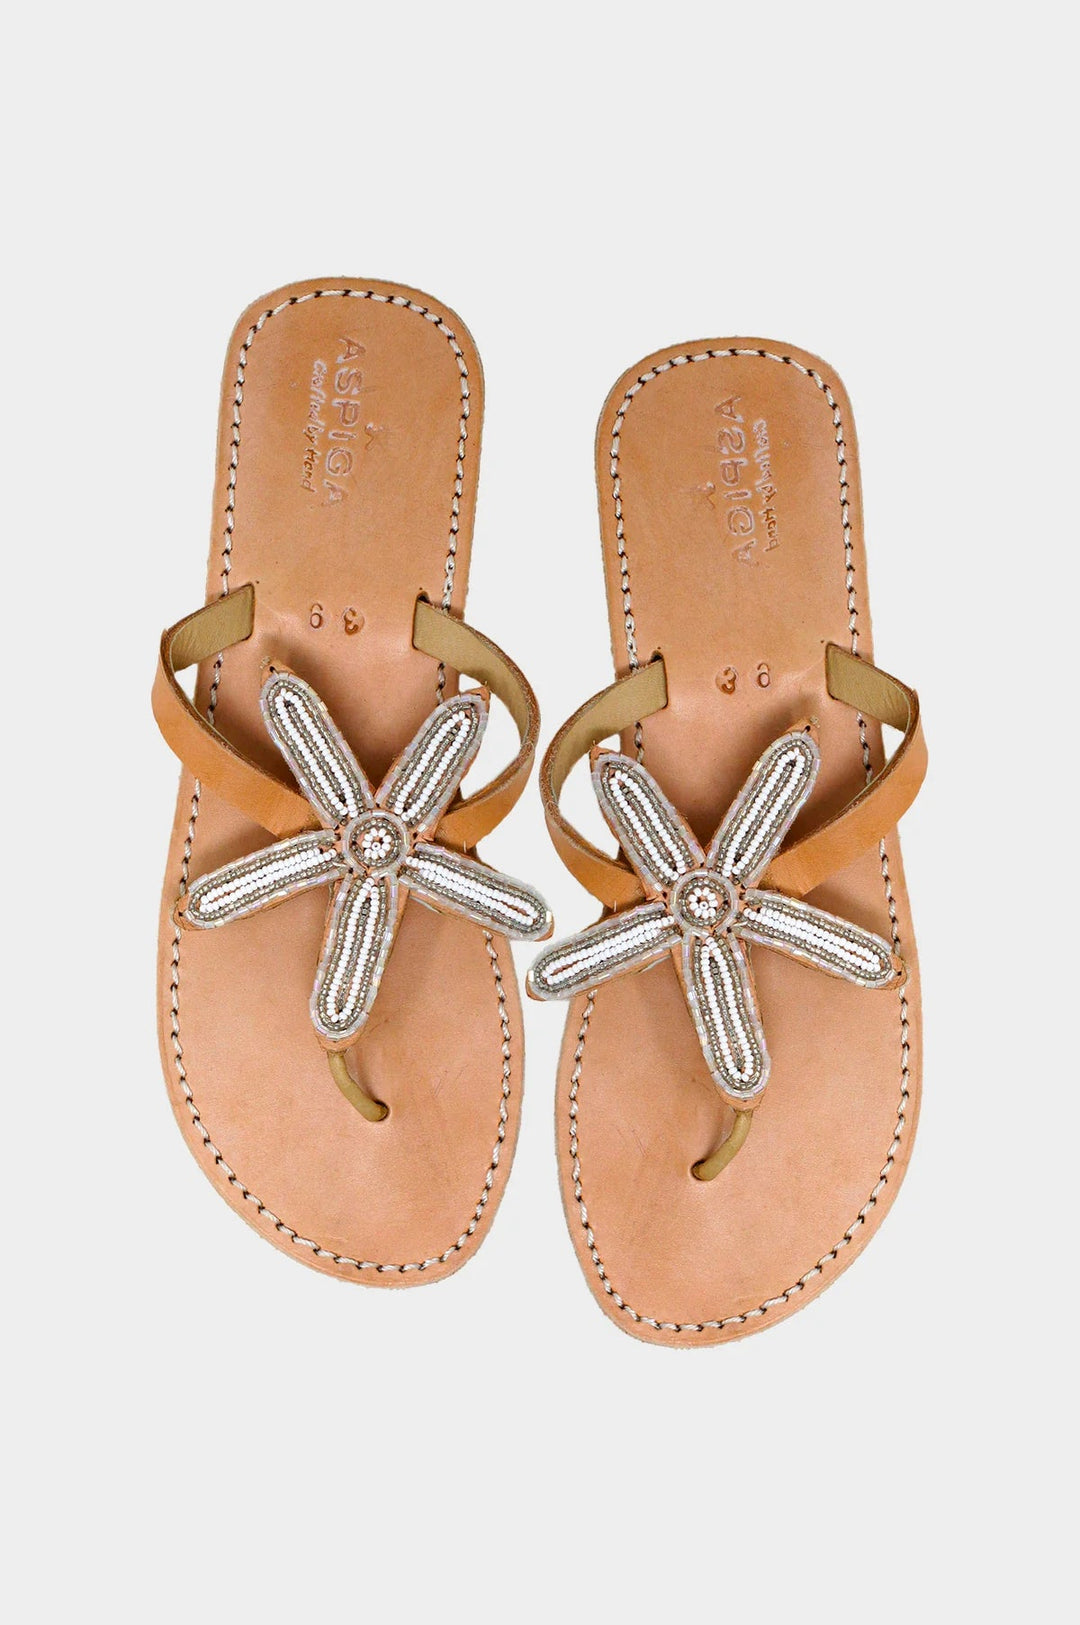 Flower Star Leather Sandals by Aspiga Flower Star Sandals Aspiga 